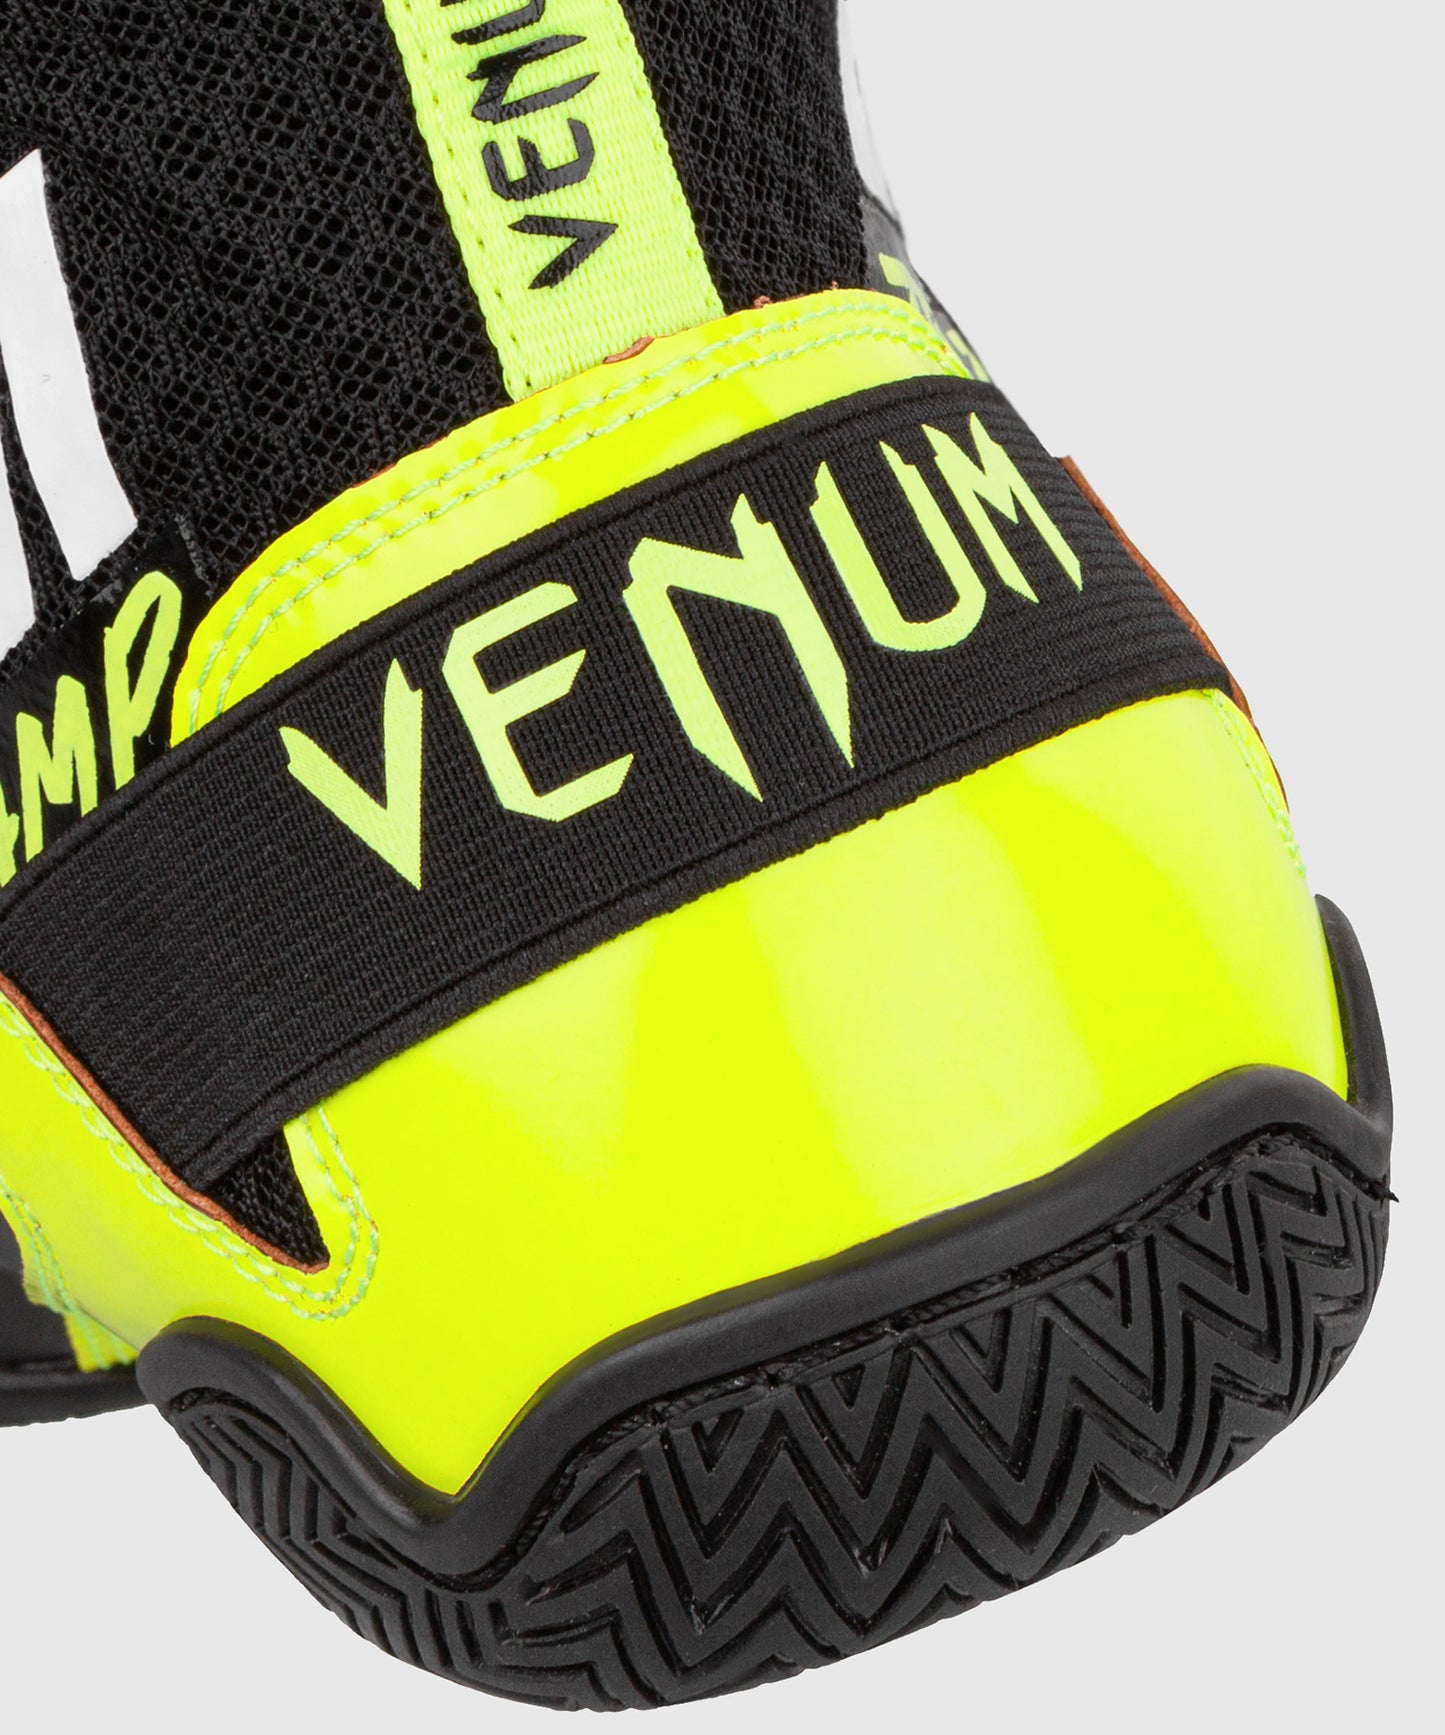 Боксерки Venum Elite VTC 2 Edition - Черный/Нео-желтый